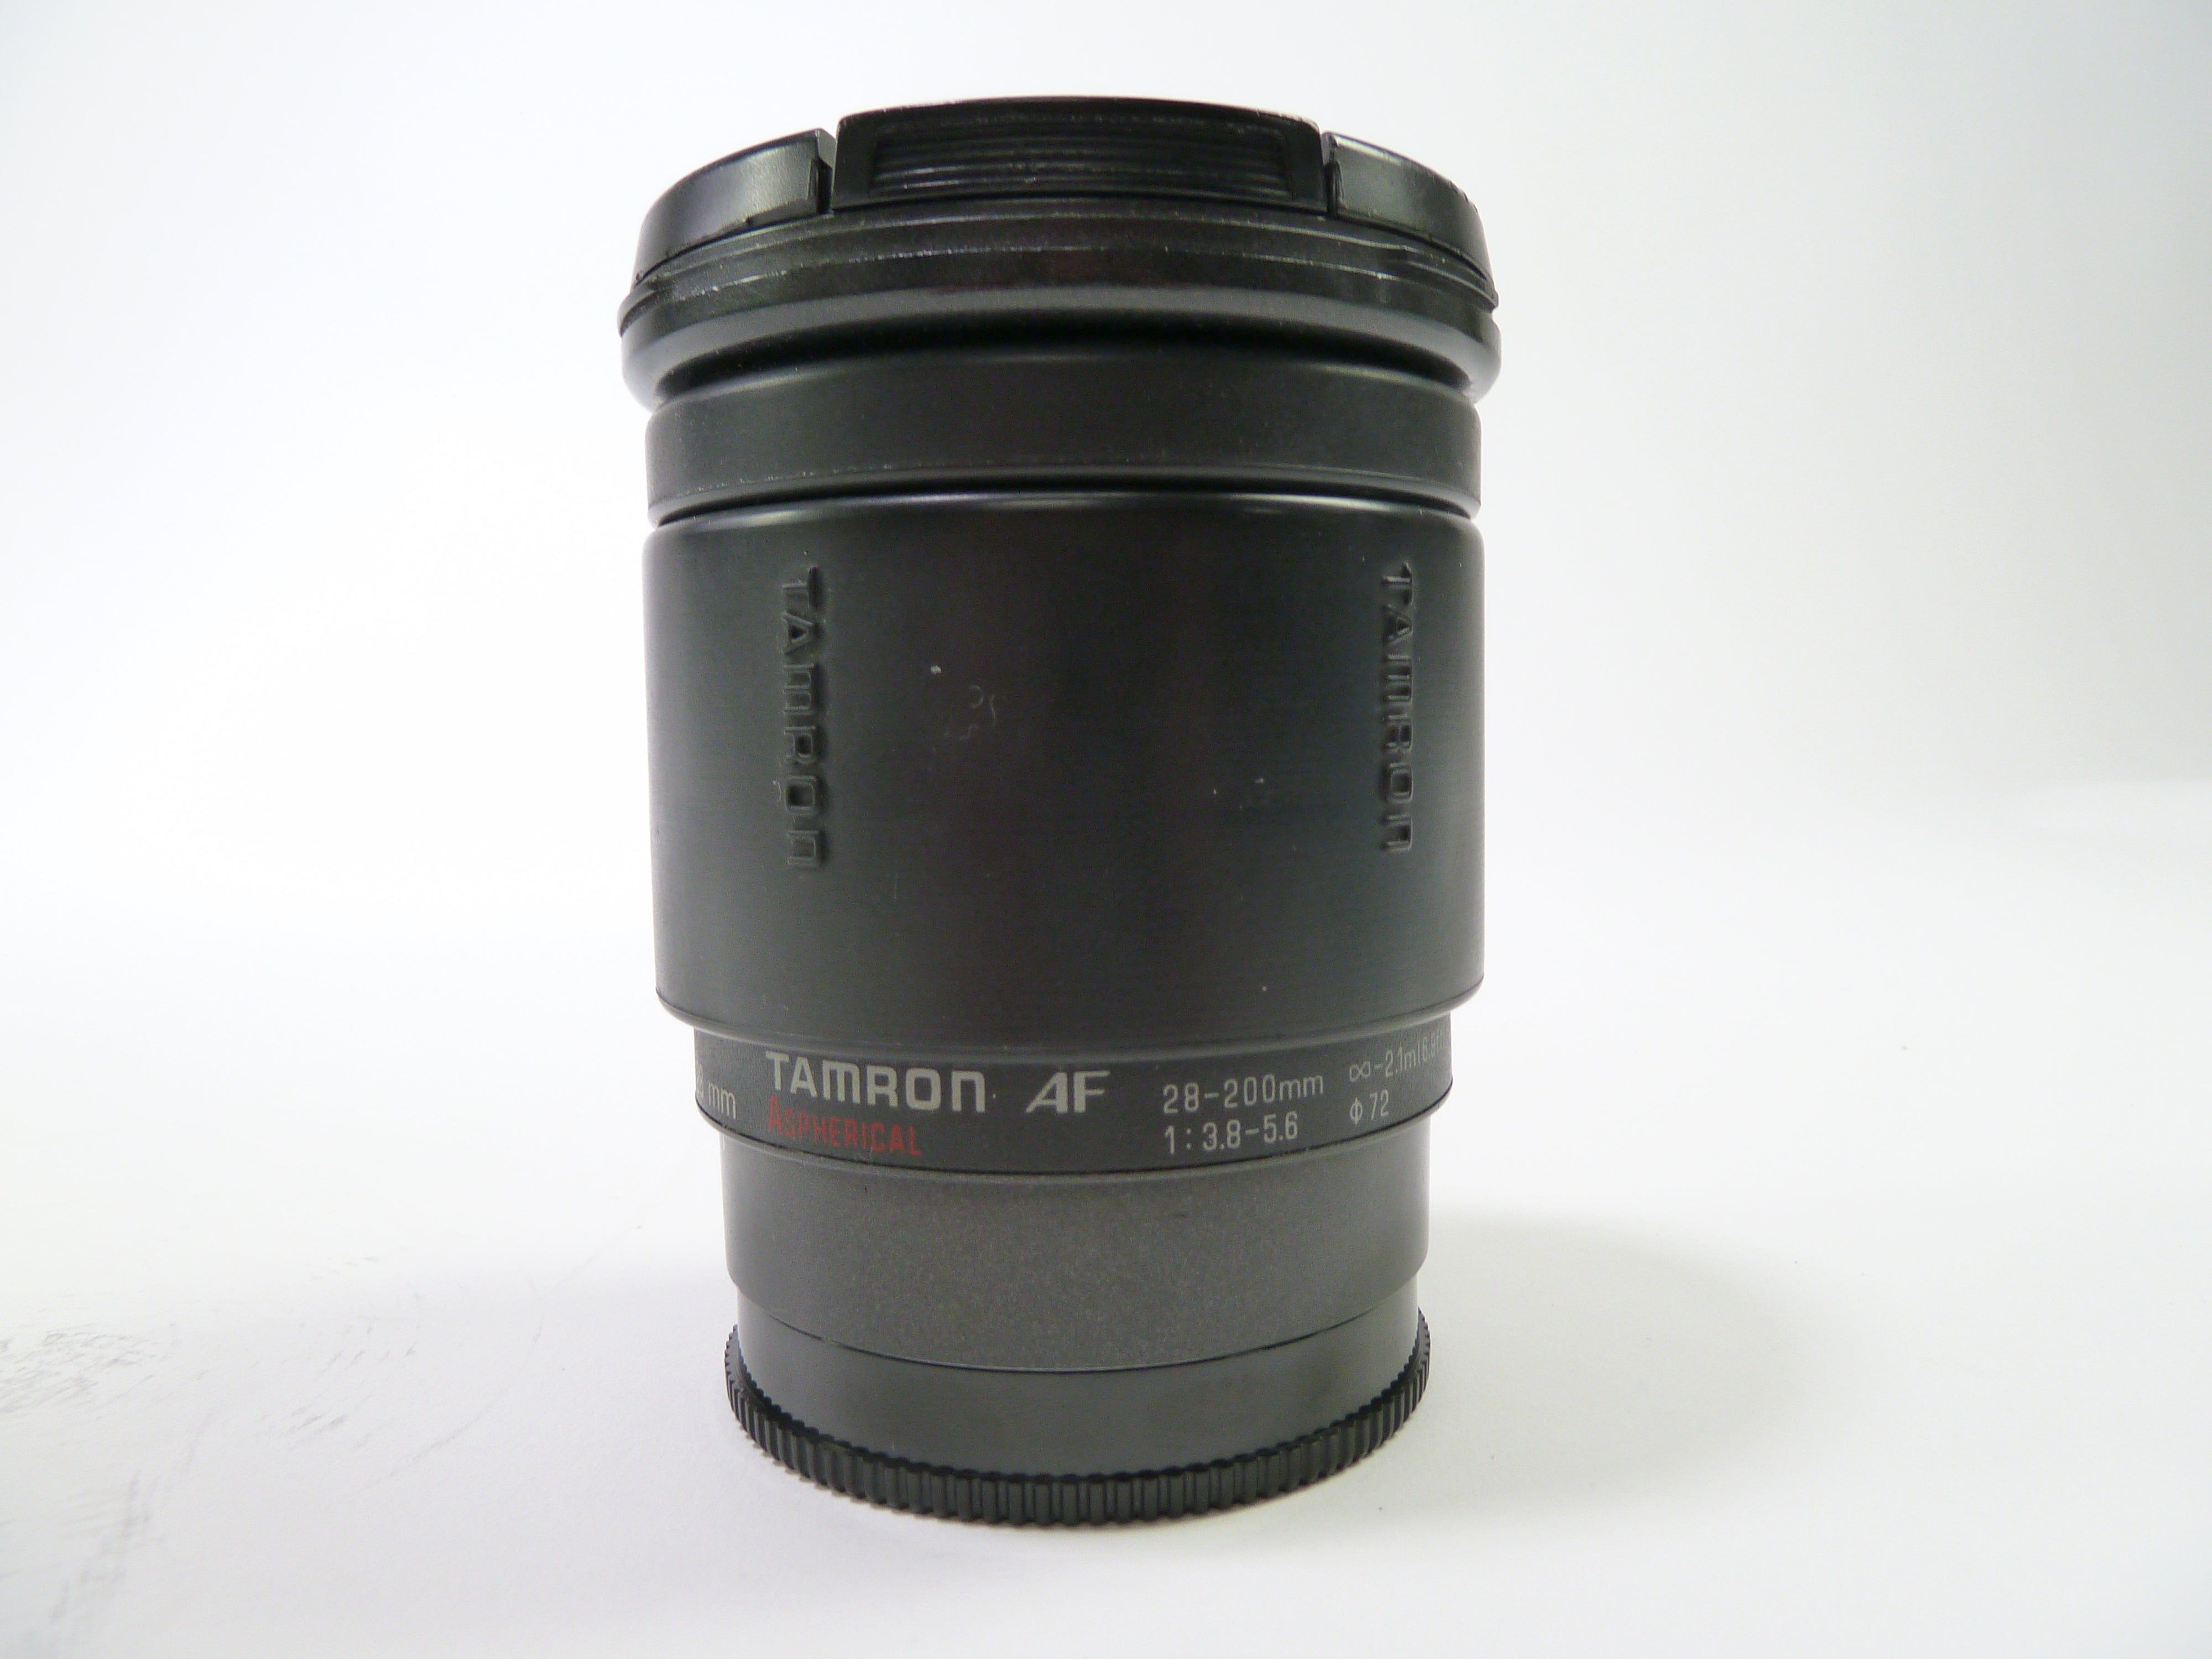 Tamron 28-200mm f/3.8-5.6 lens for use with Minolta AF – Camera